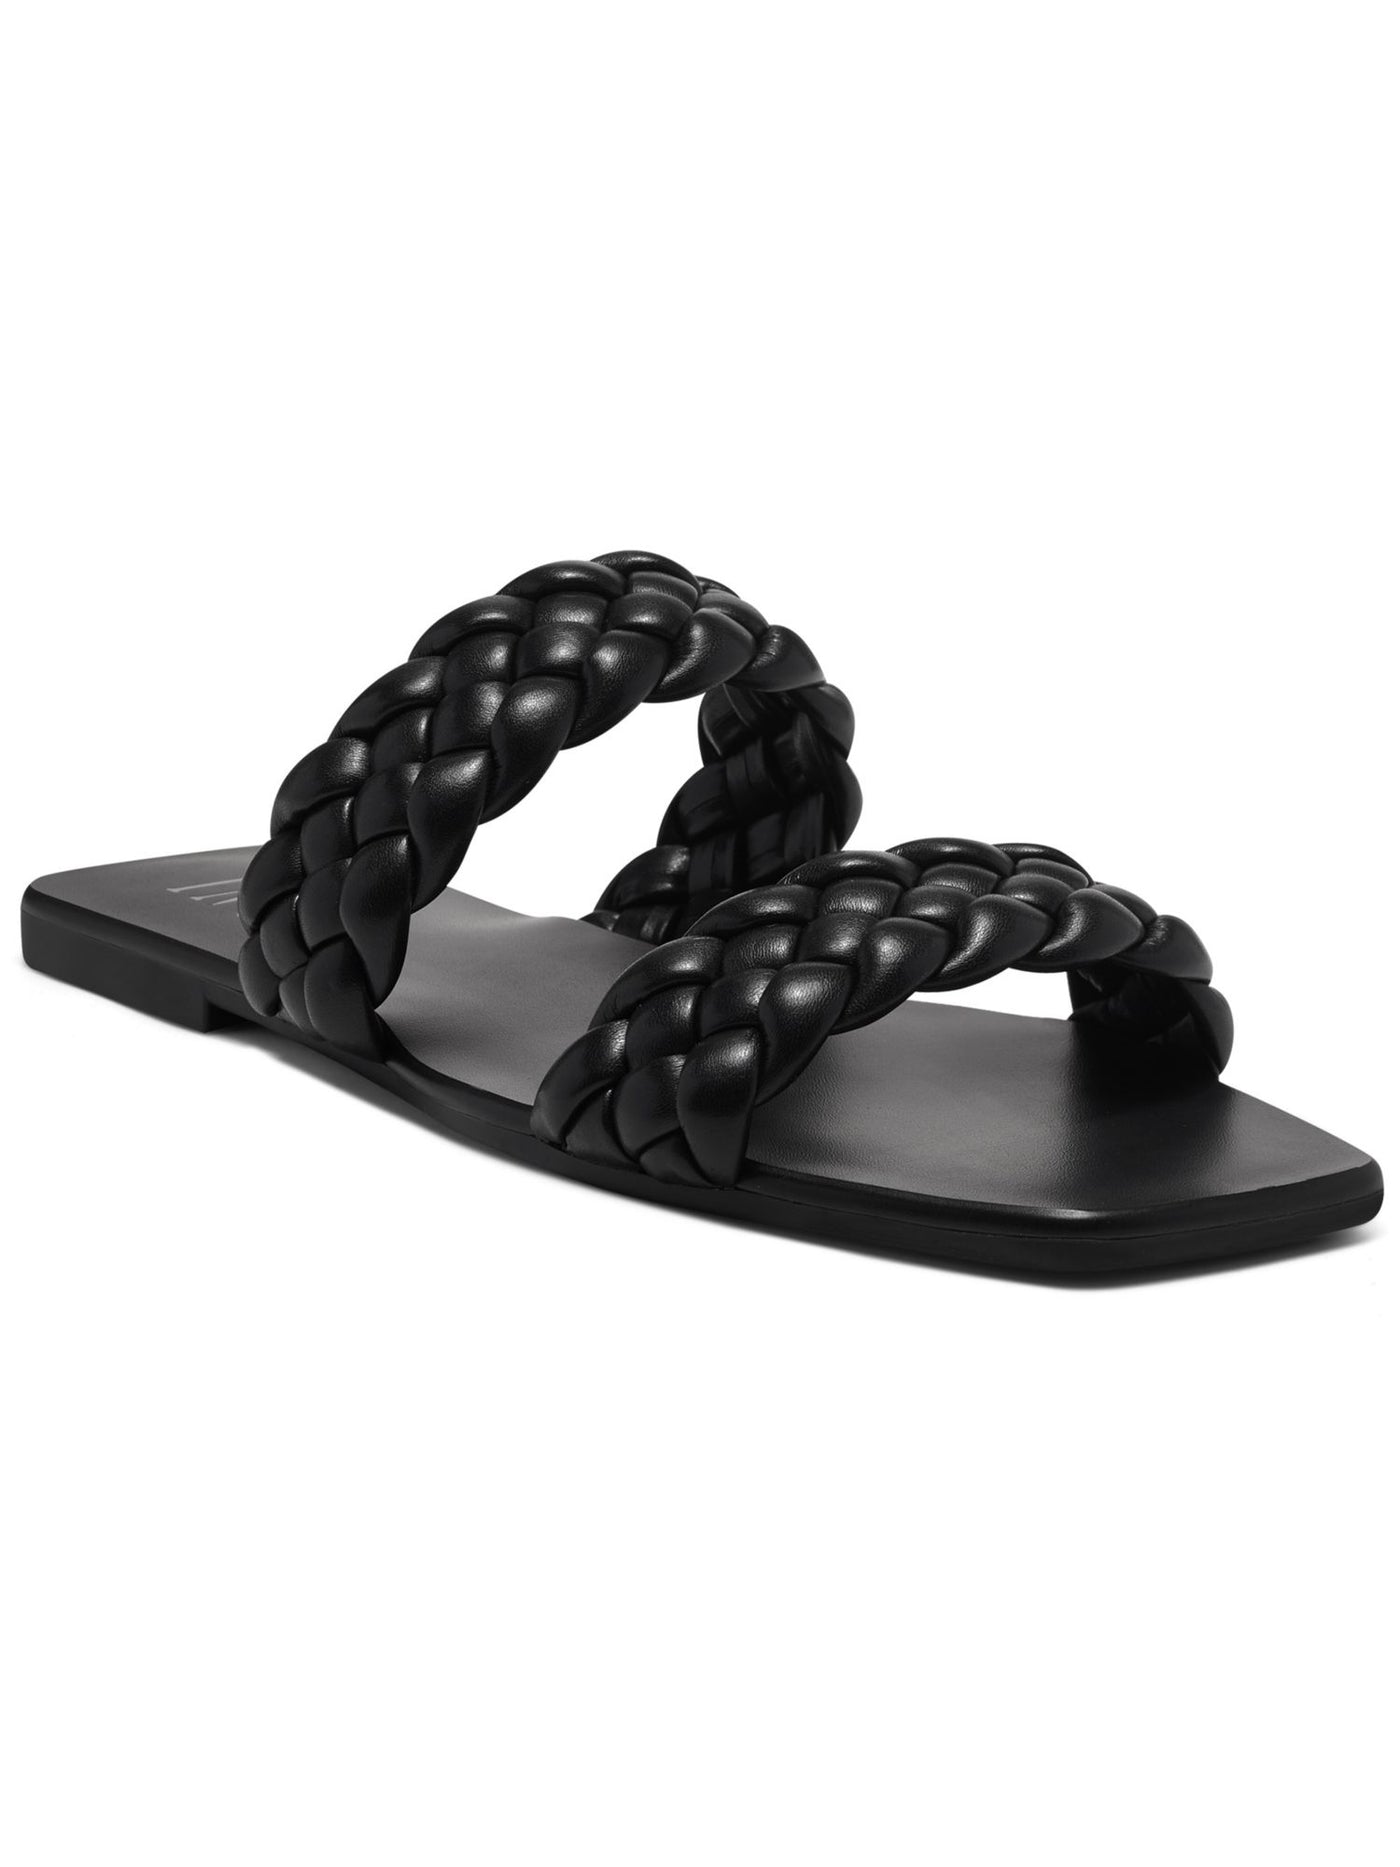 INC Womens Black Braided Double Straps Petria Square Toe Slip On Sandals Shoes 8 M